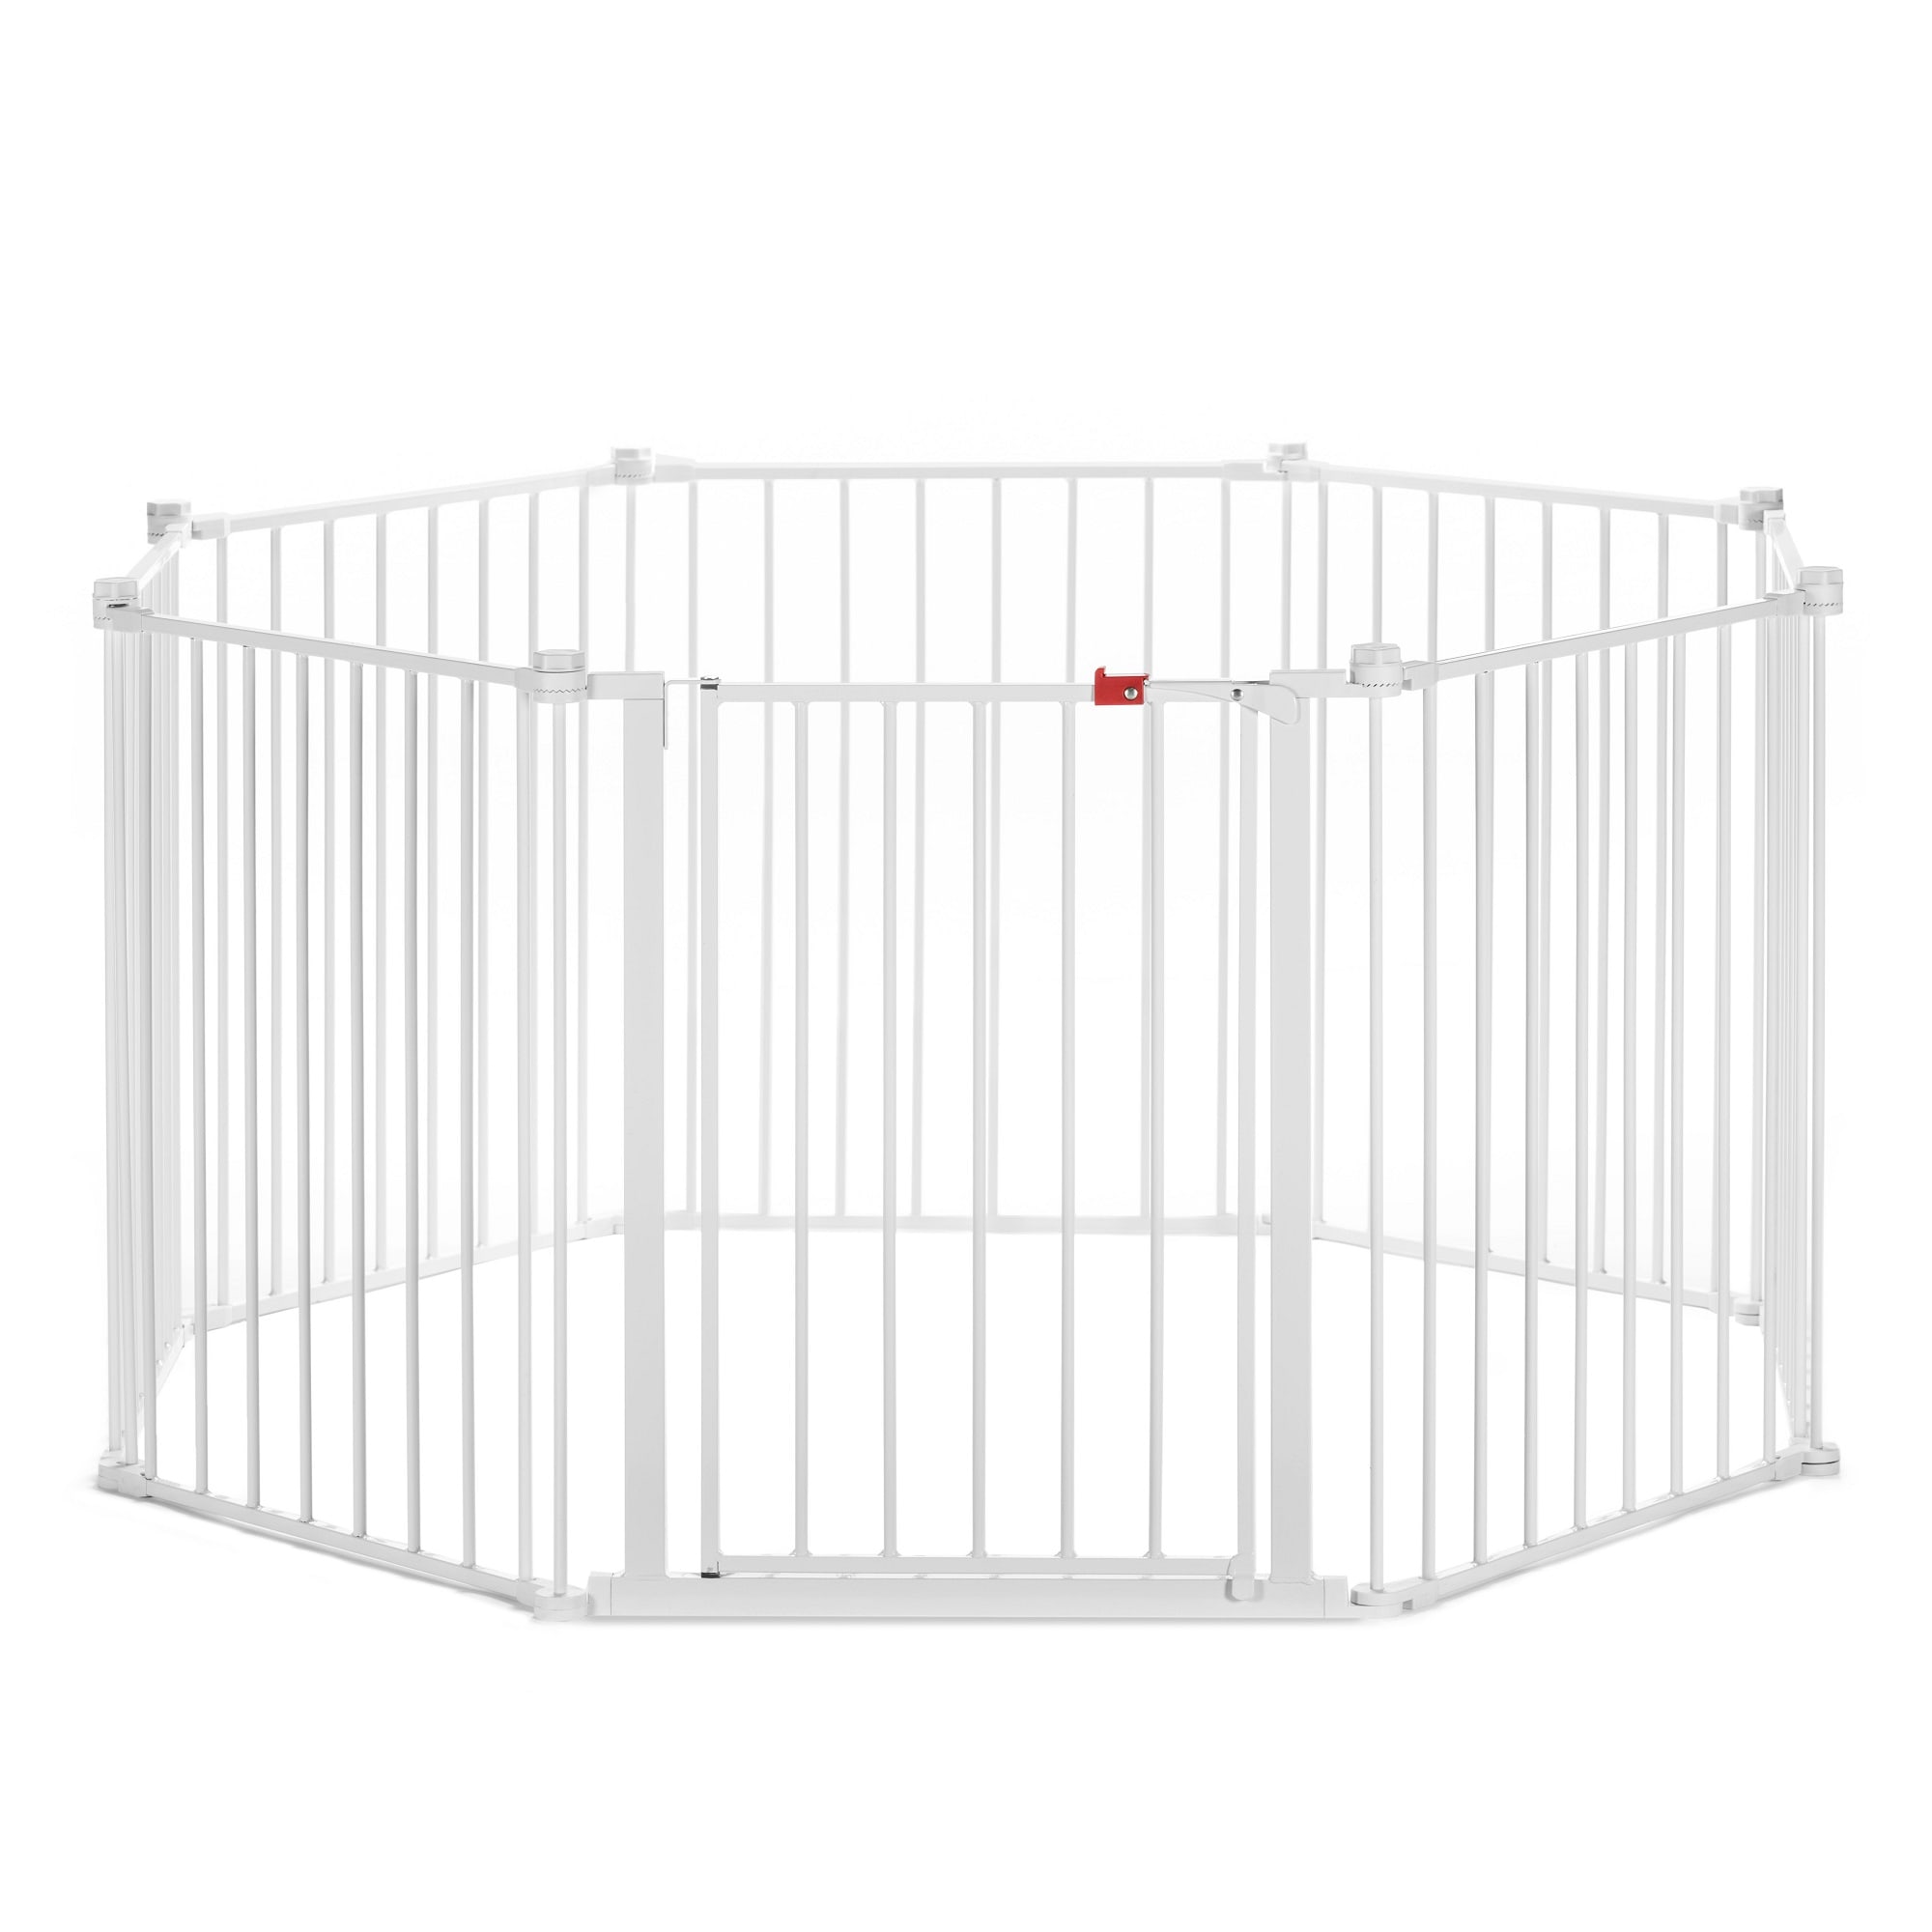 Big 8 Panel Wide Play Yard Playpen Baby Child Pet Dog Gate Large Secure Pen Safe